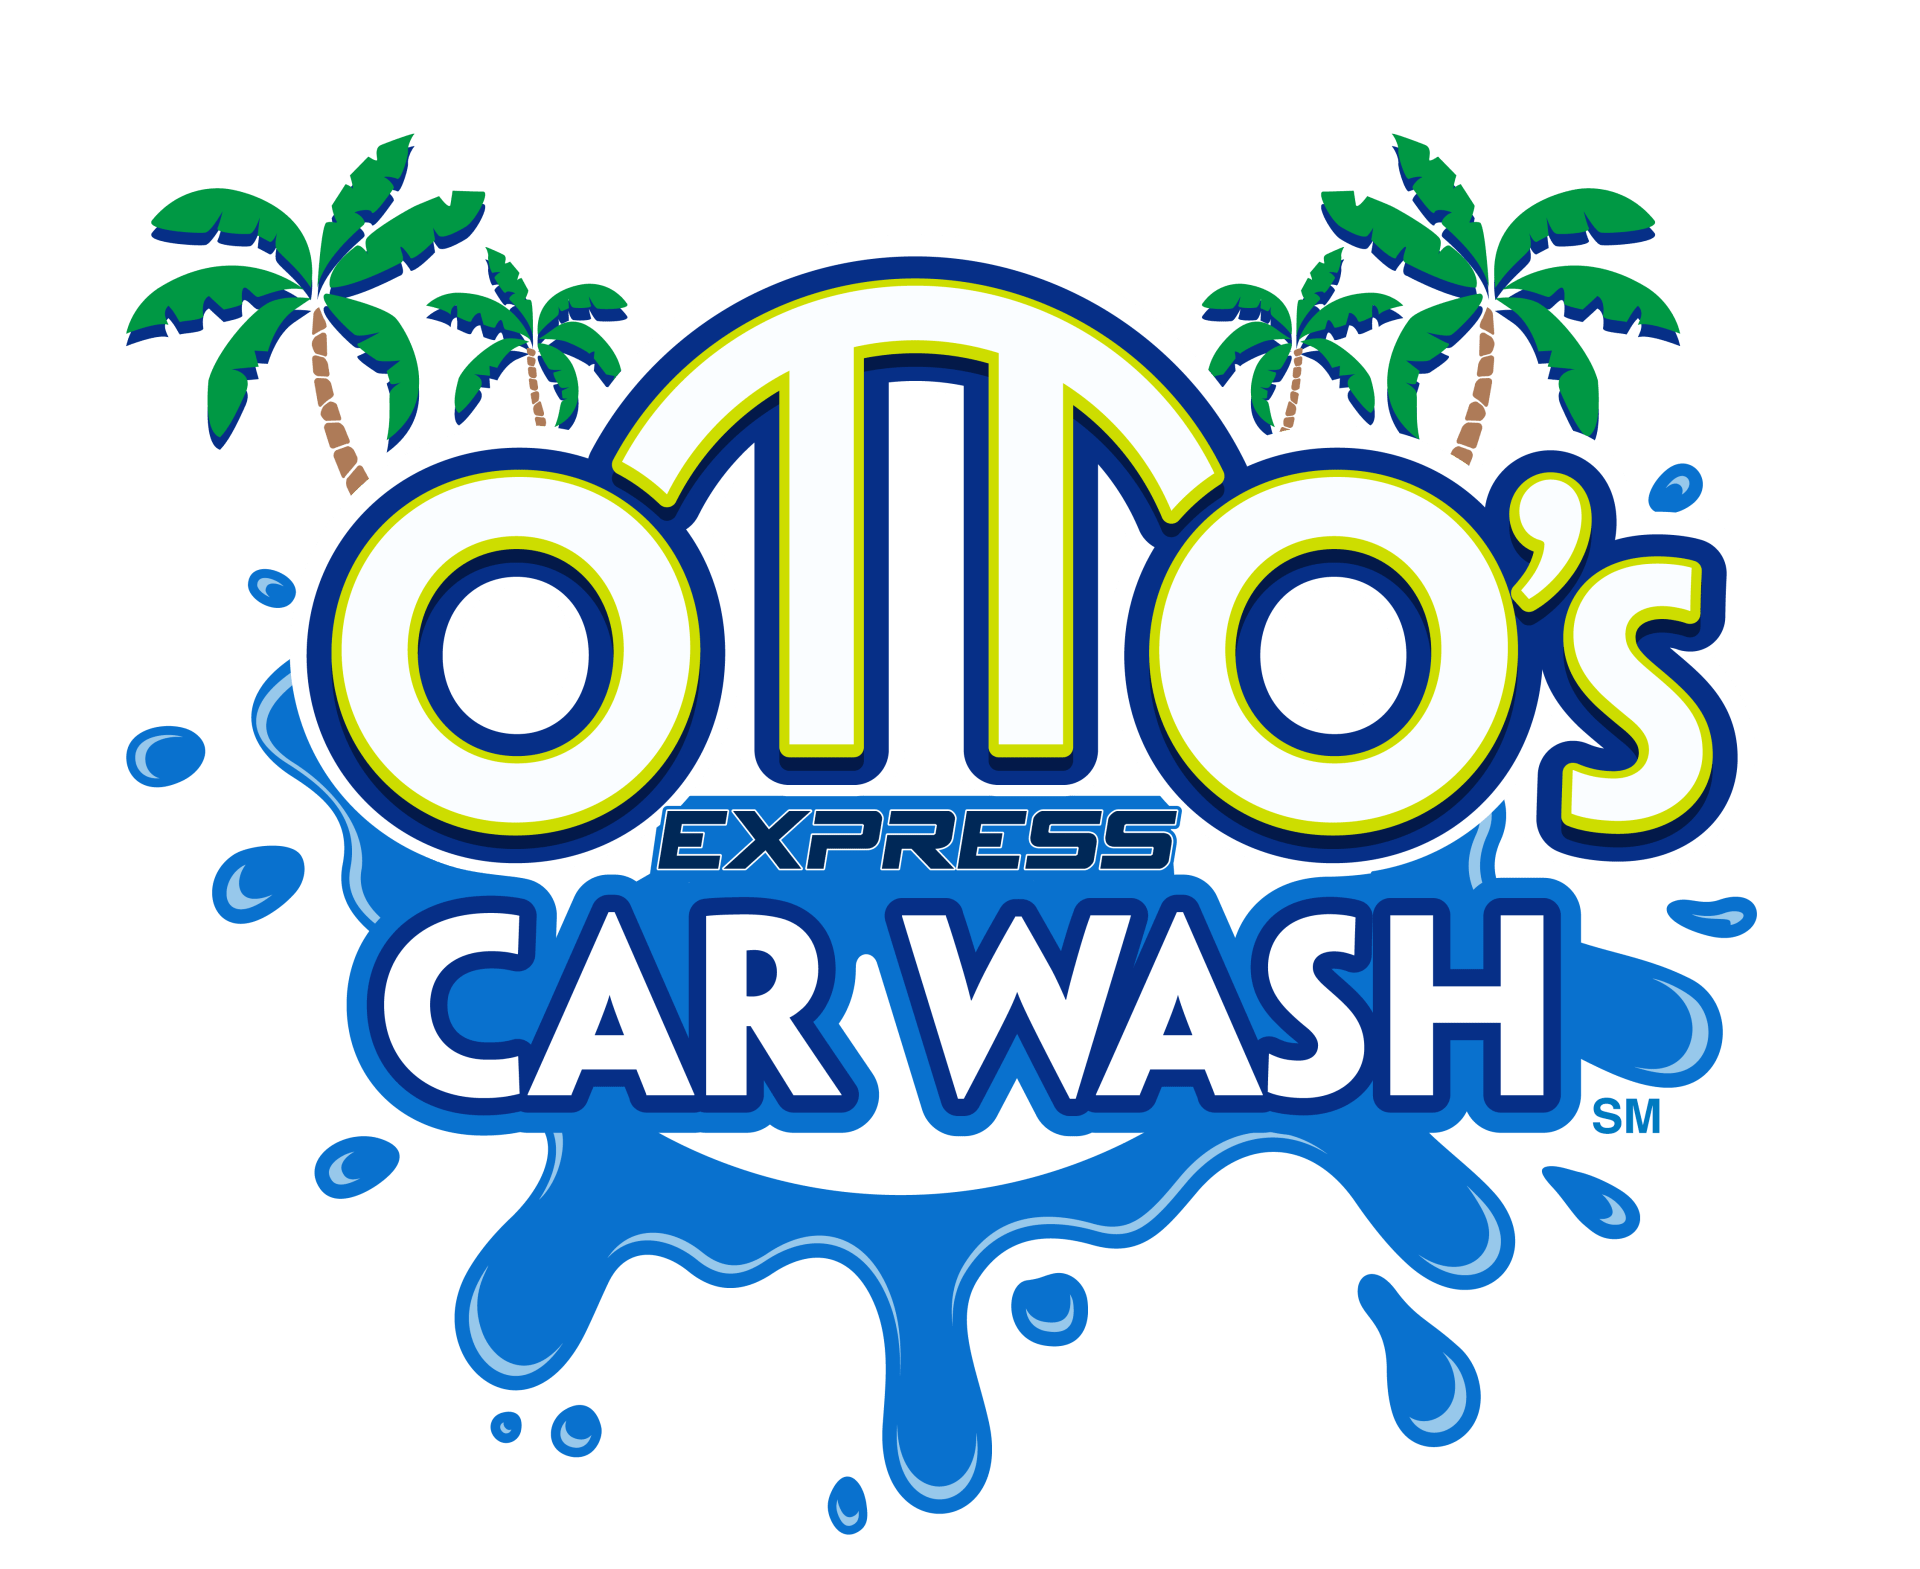 Otto's Express Car Wash logo with splash graphic